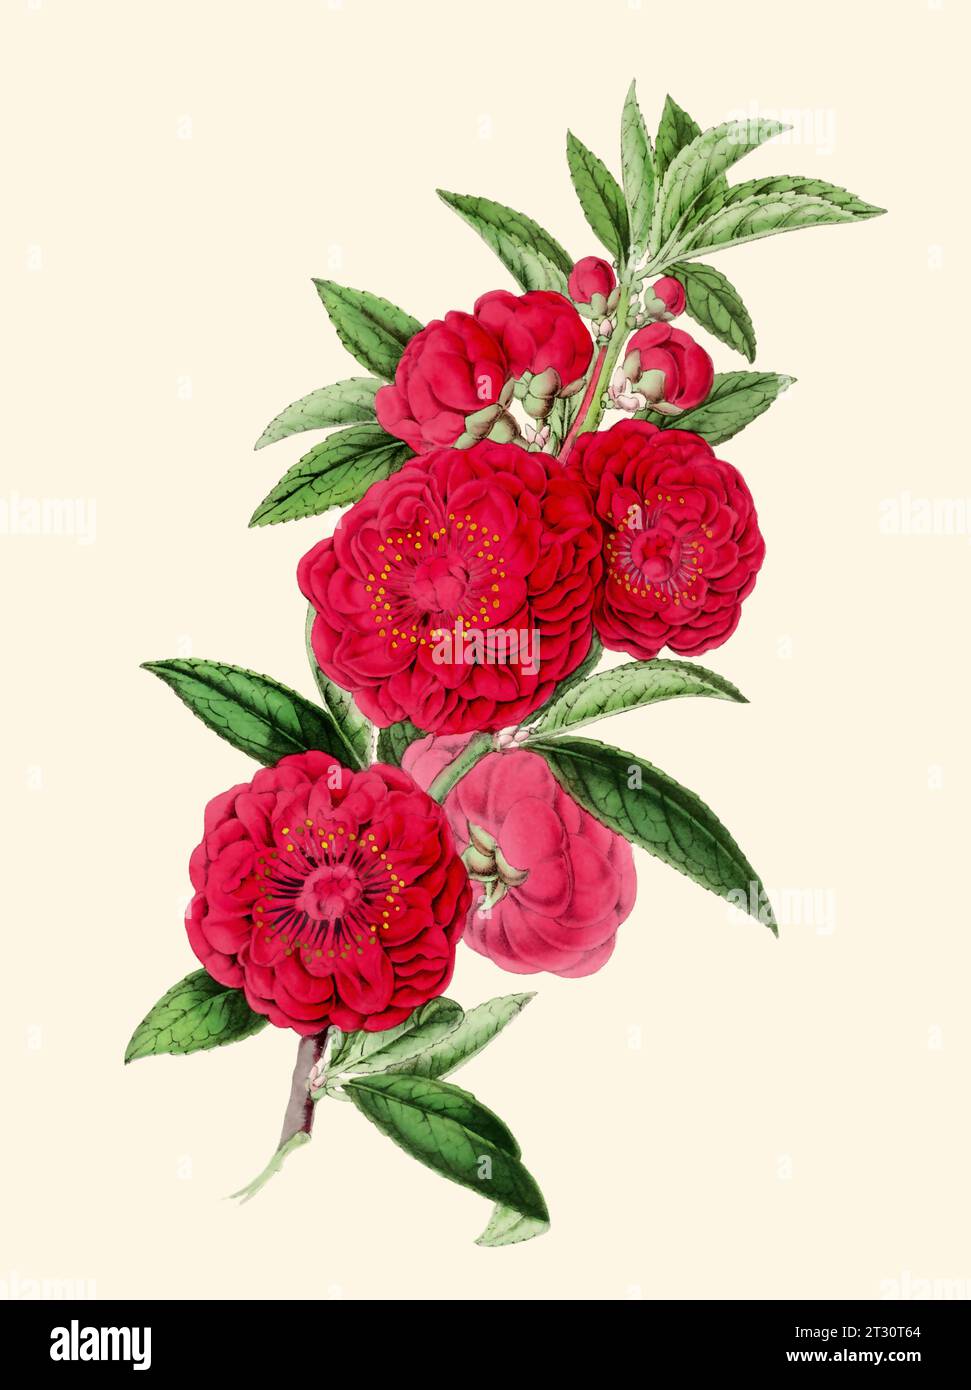 Colorful Camellia Flower Illustration: A digital vintage-style flower on a plain beige background. Stock Photo